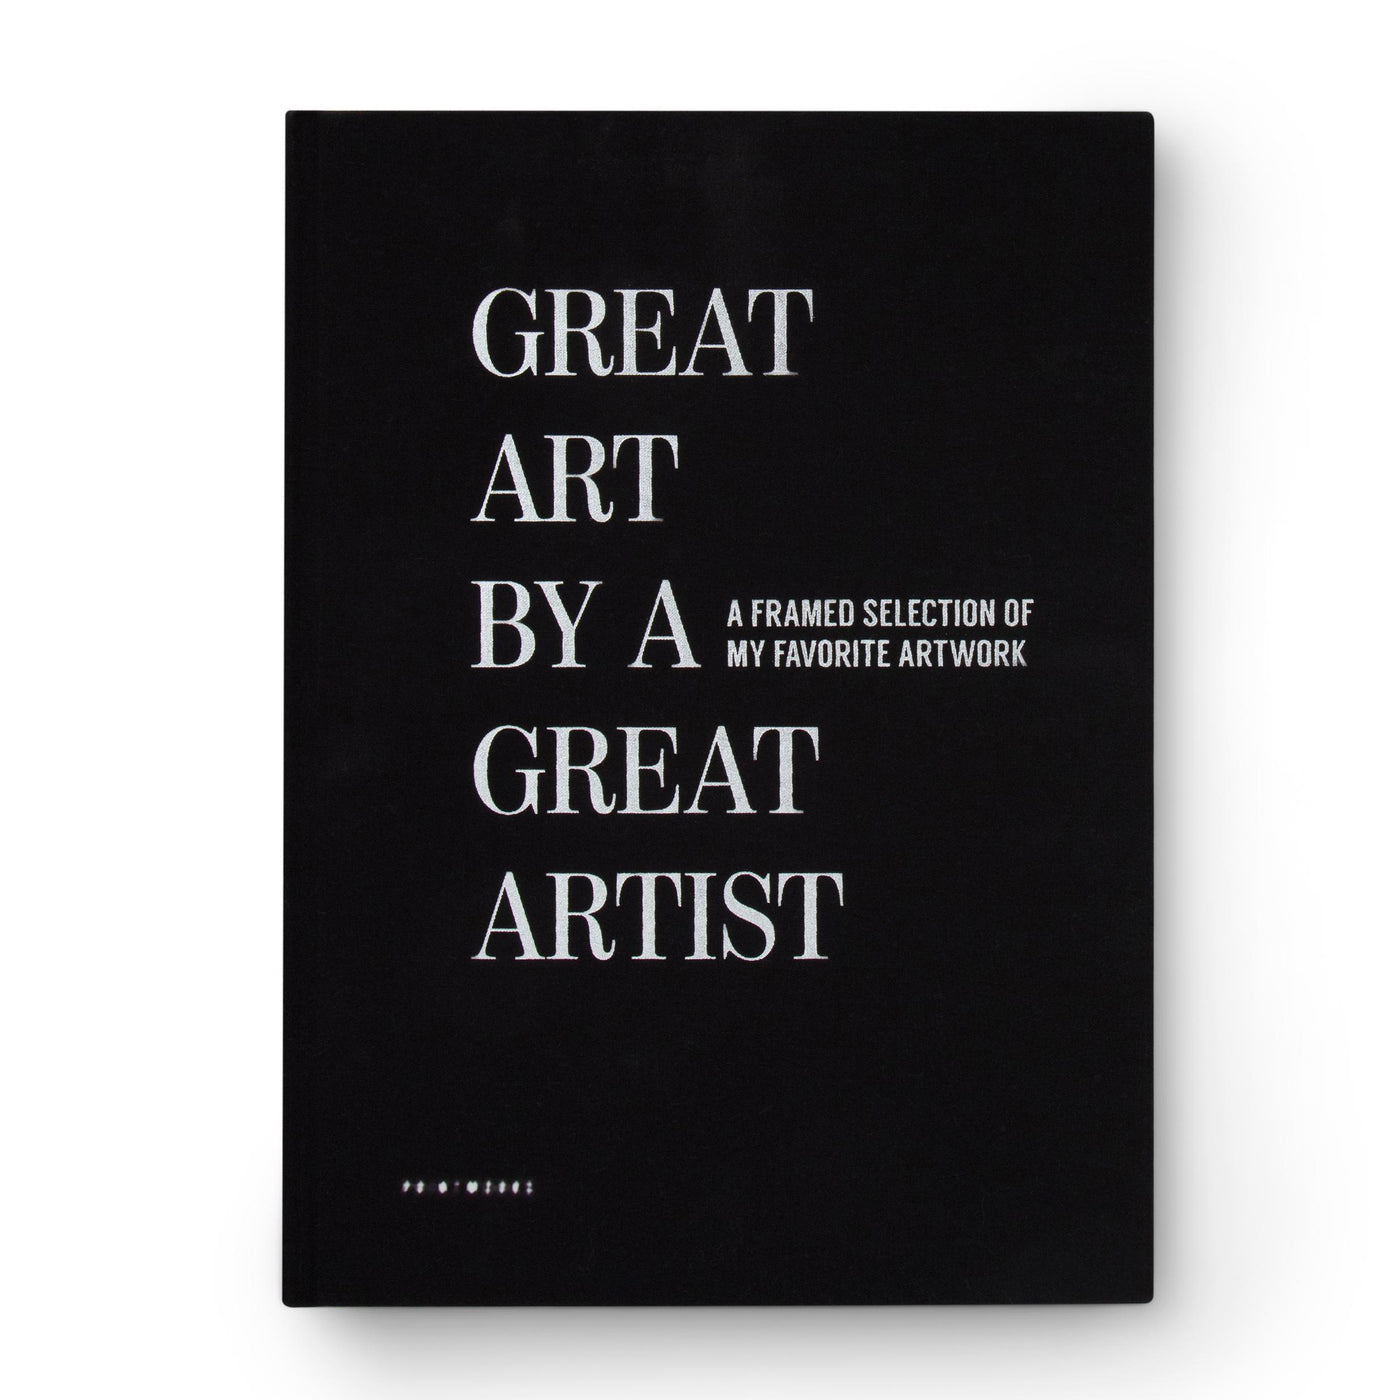 Great Art by A Great Artist Book Album - Black